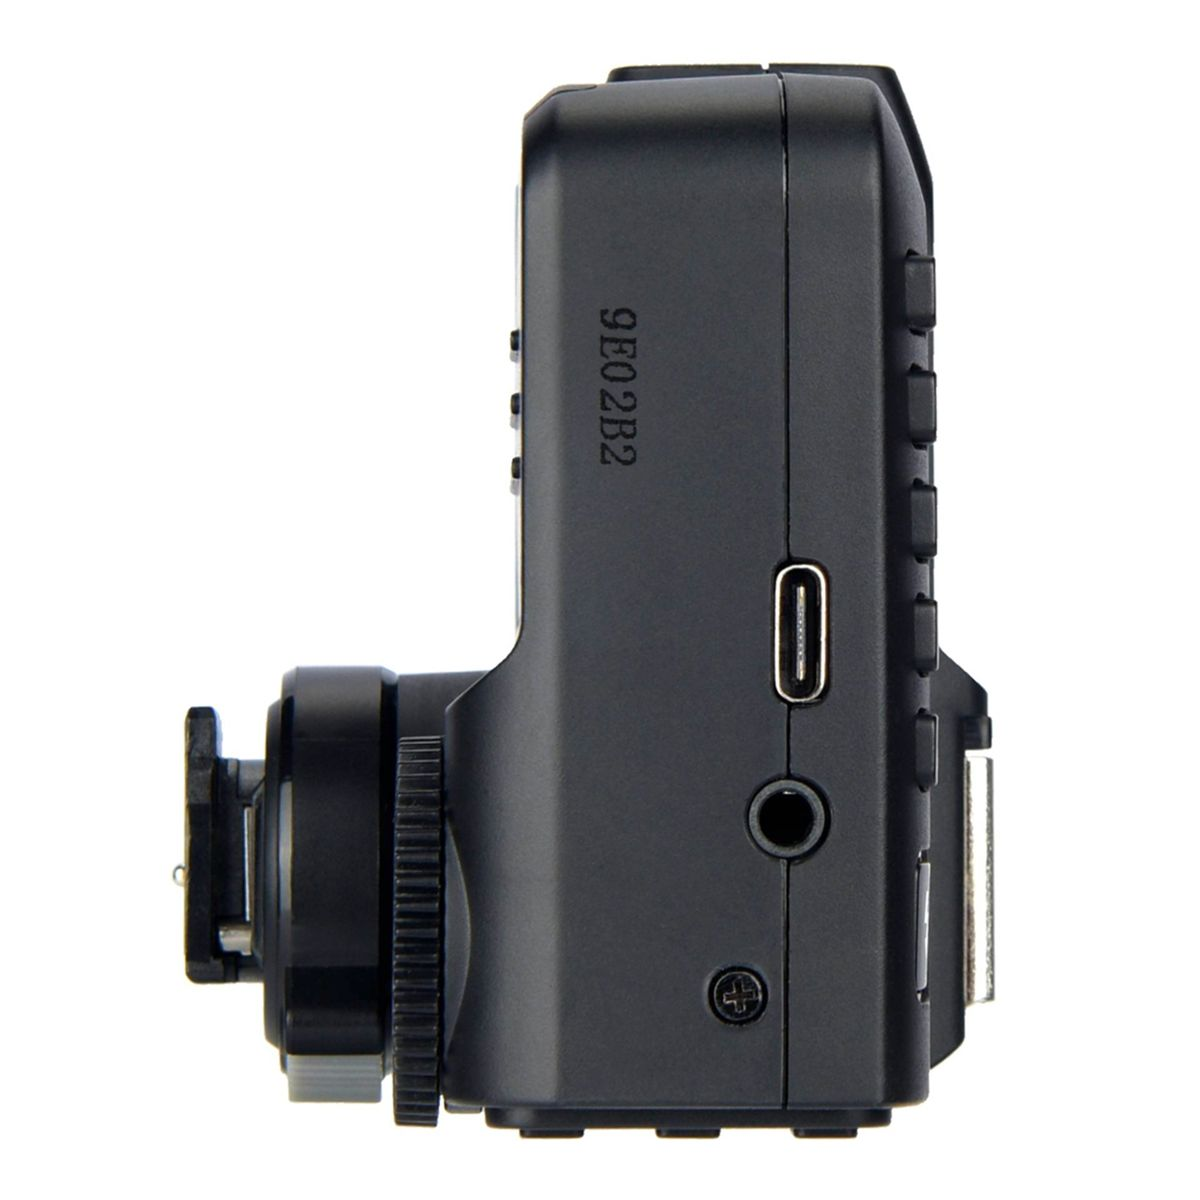 Sony Flash Sony TTL X2 GODOX für Trigger 2.4G